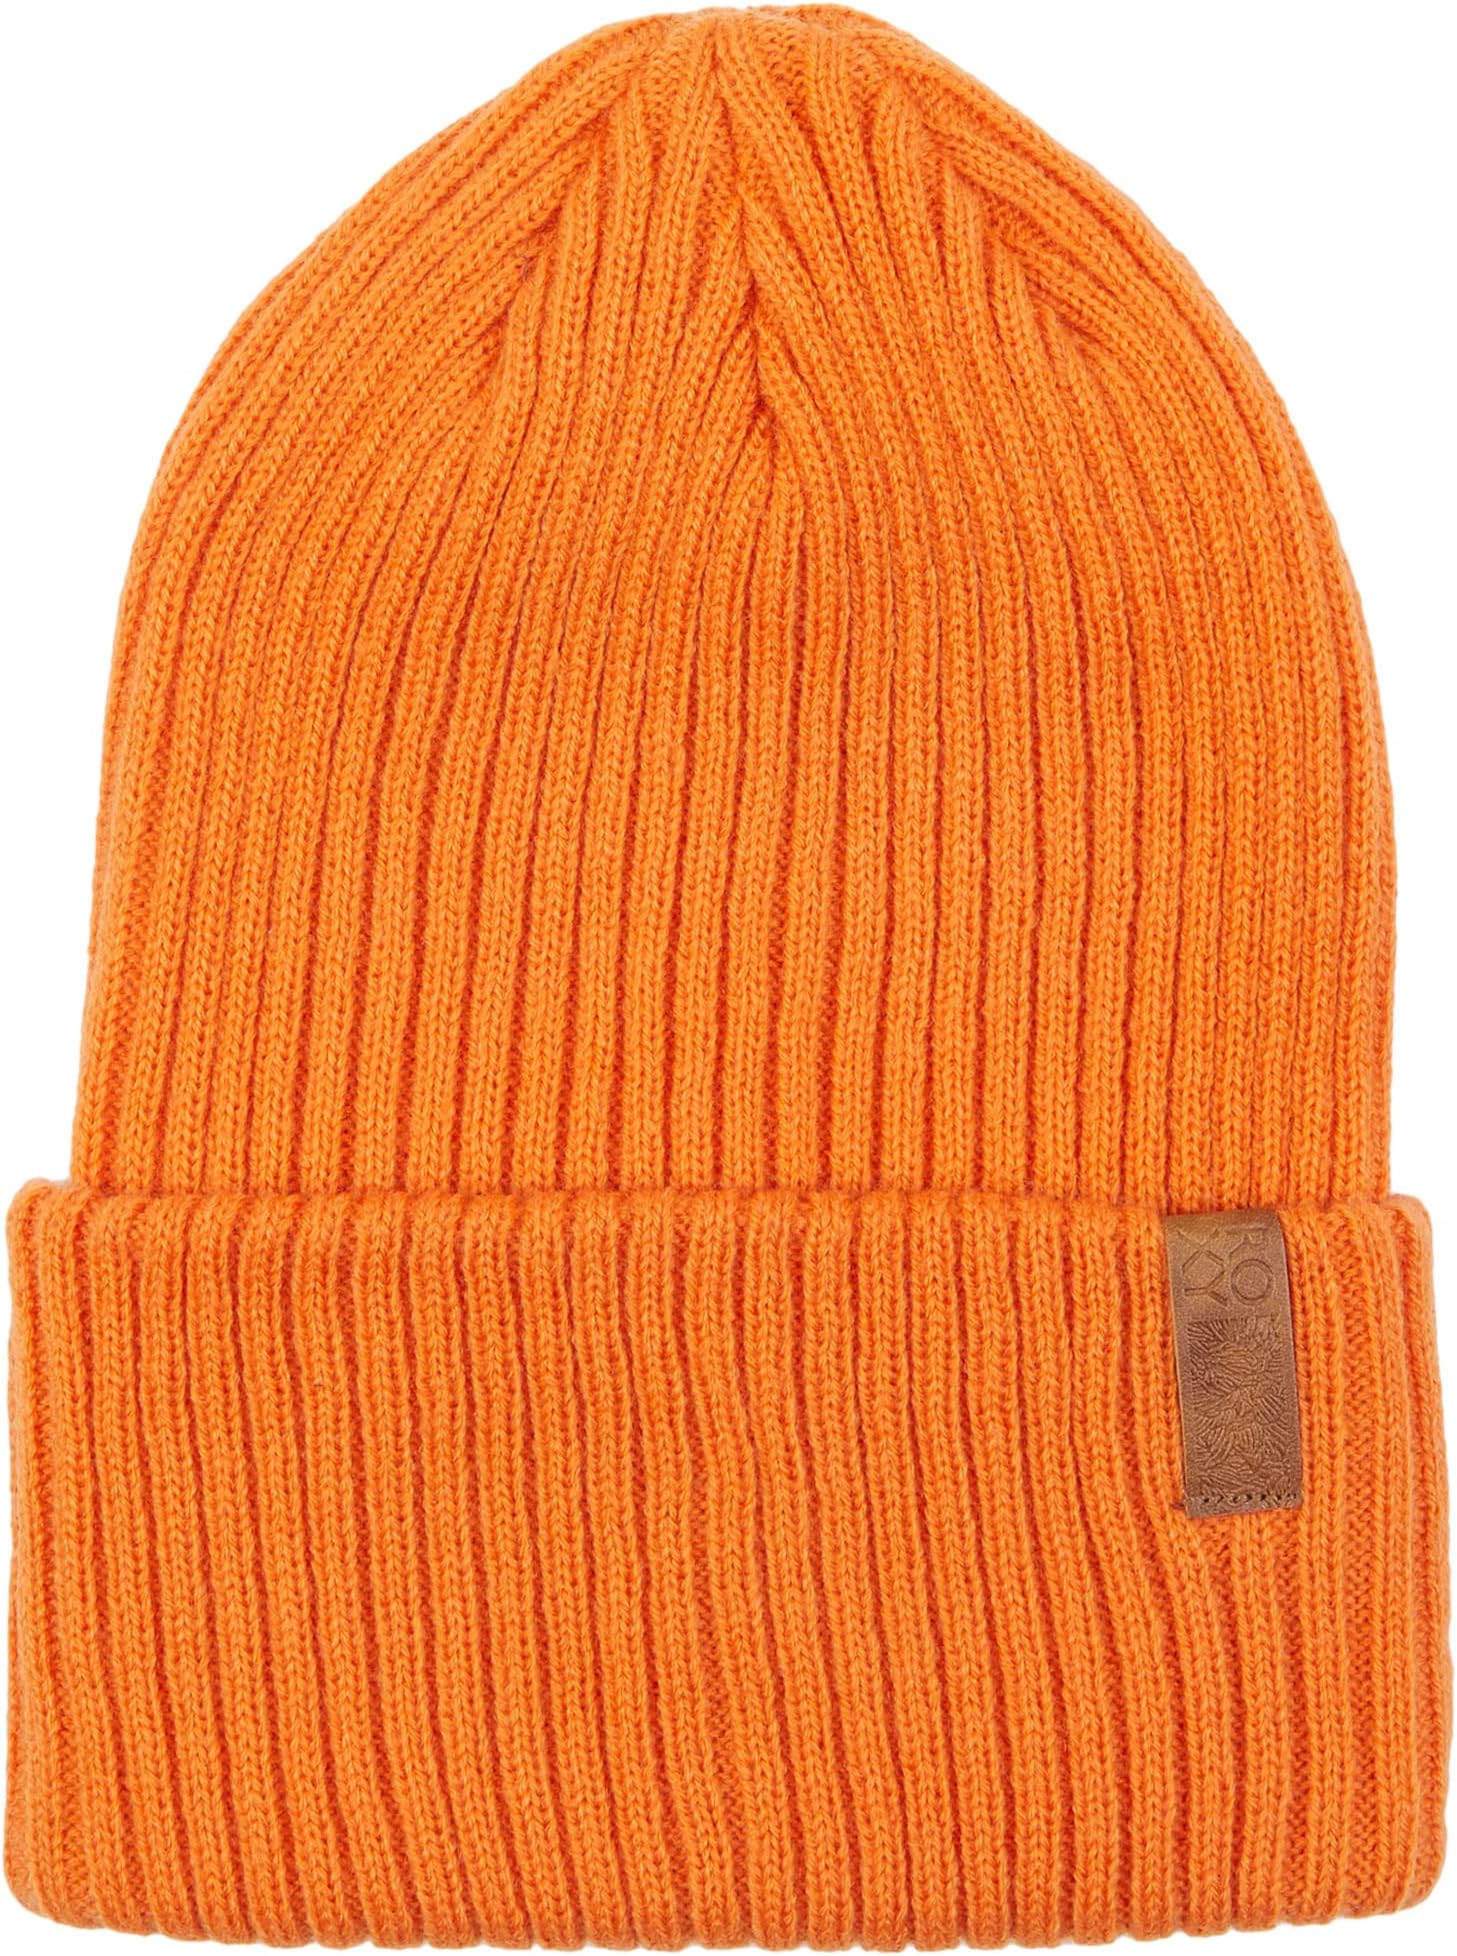 шапка Dynabeat Roxy, цвет Celosia Orange шапка бини roxy dynabeat цвет оранжевый размер one size